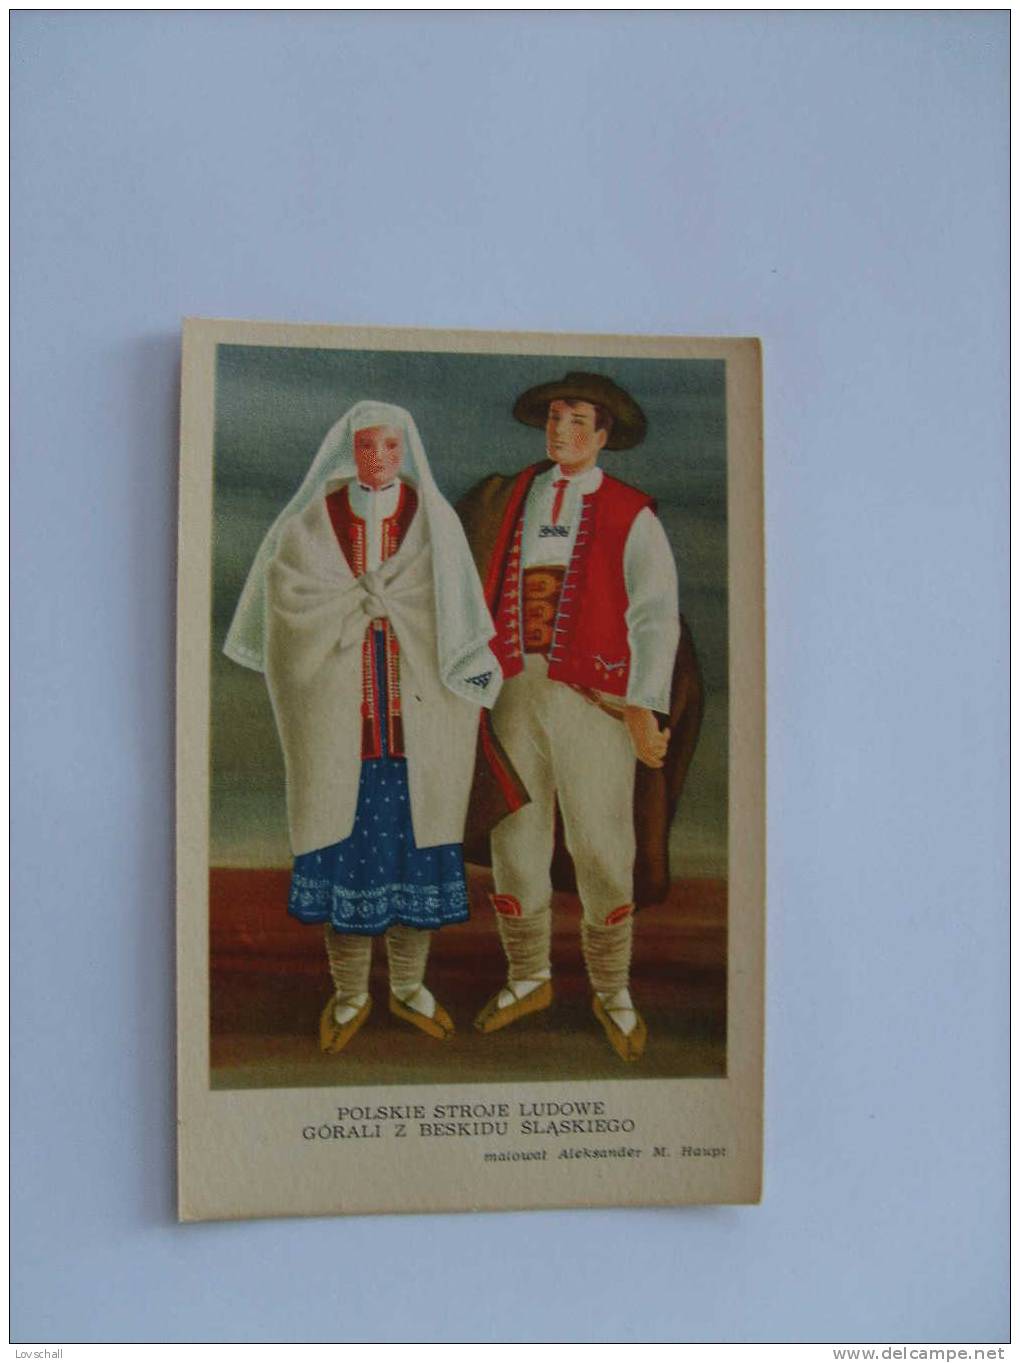 Polish Folk Coustumes - Costumes